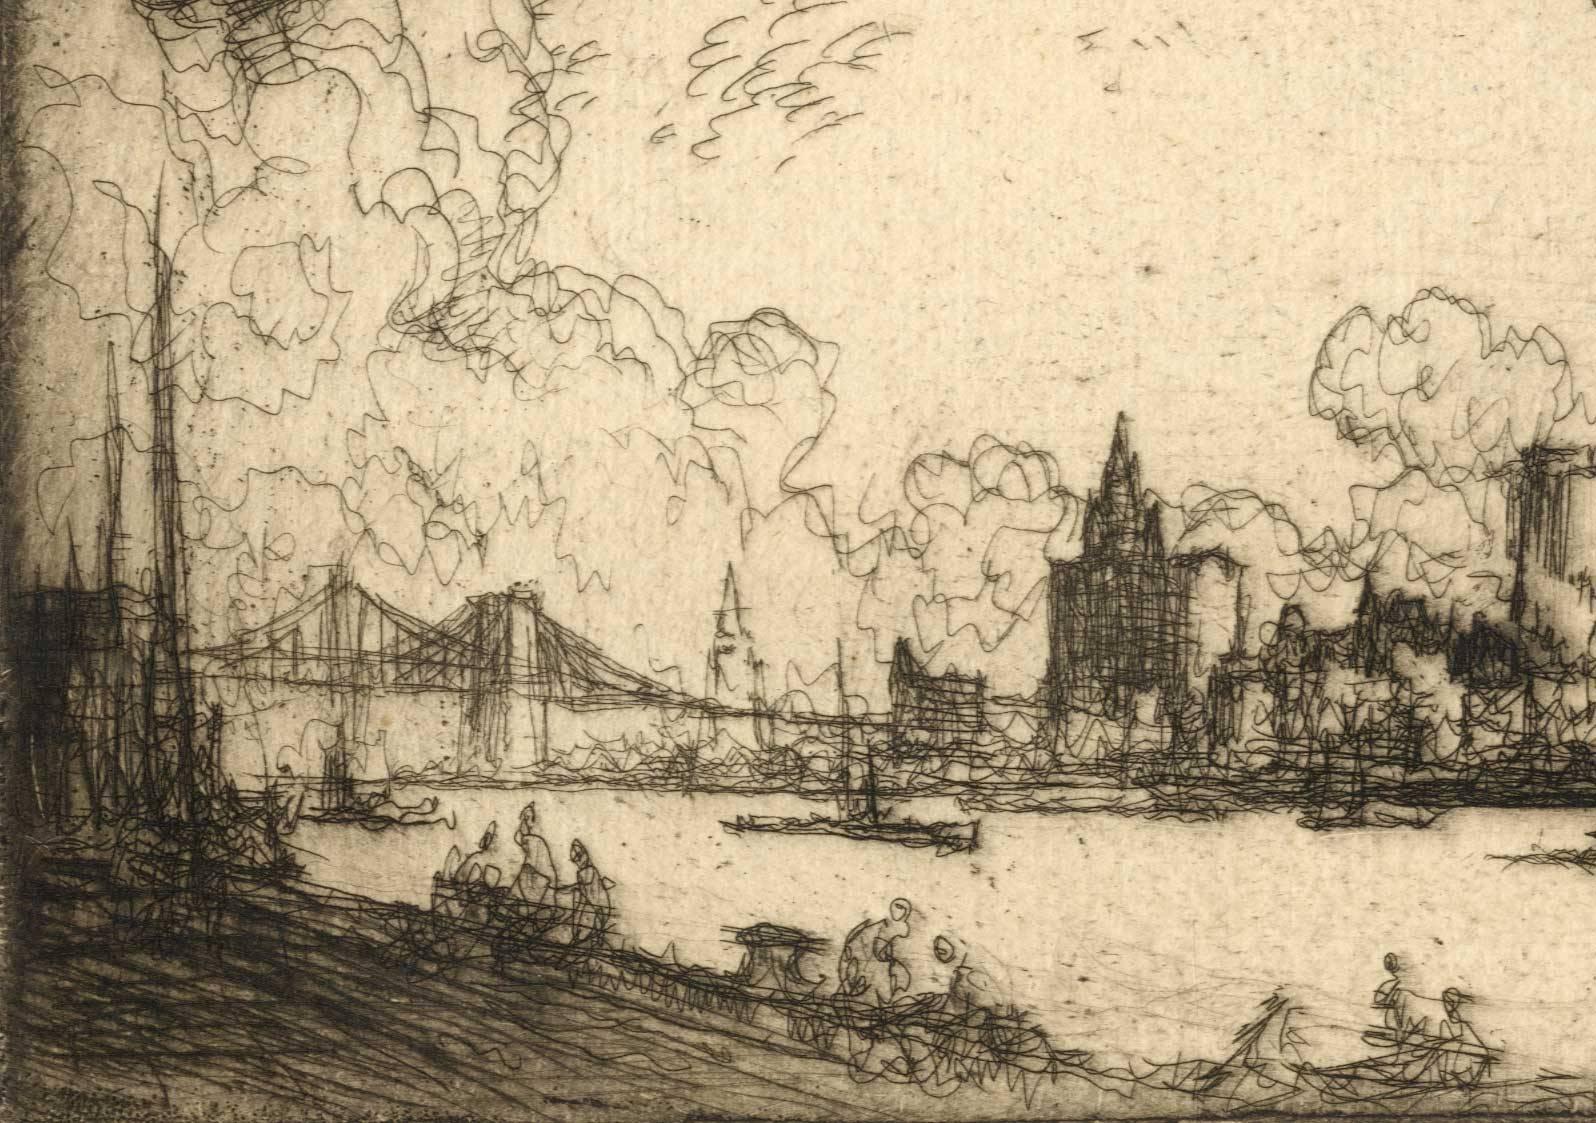 New York From Brooklyn (historical skyline of Manhattan with Brooklyn Bridge) - Print by Joseph Pennell